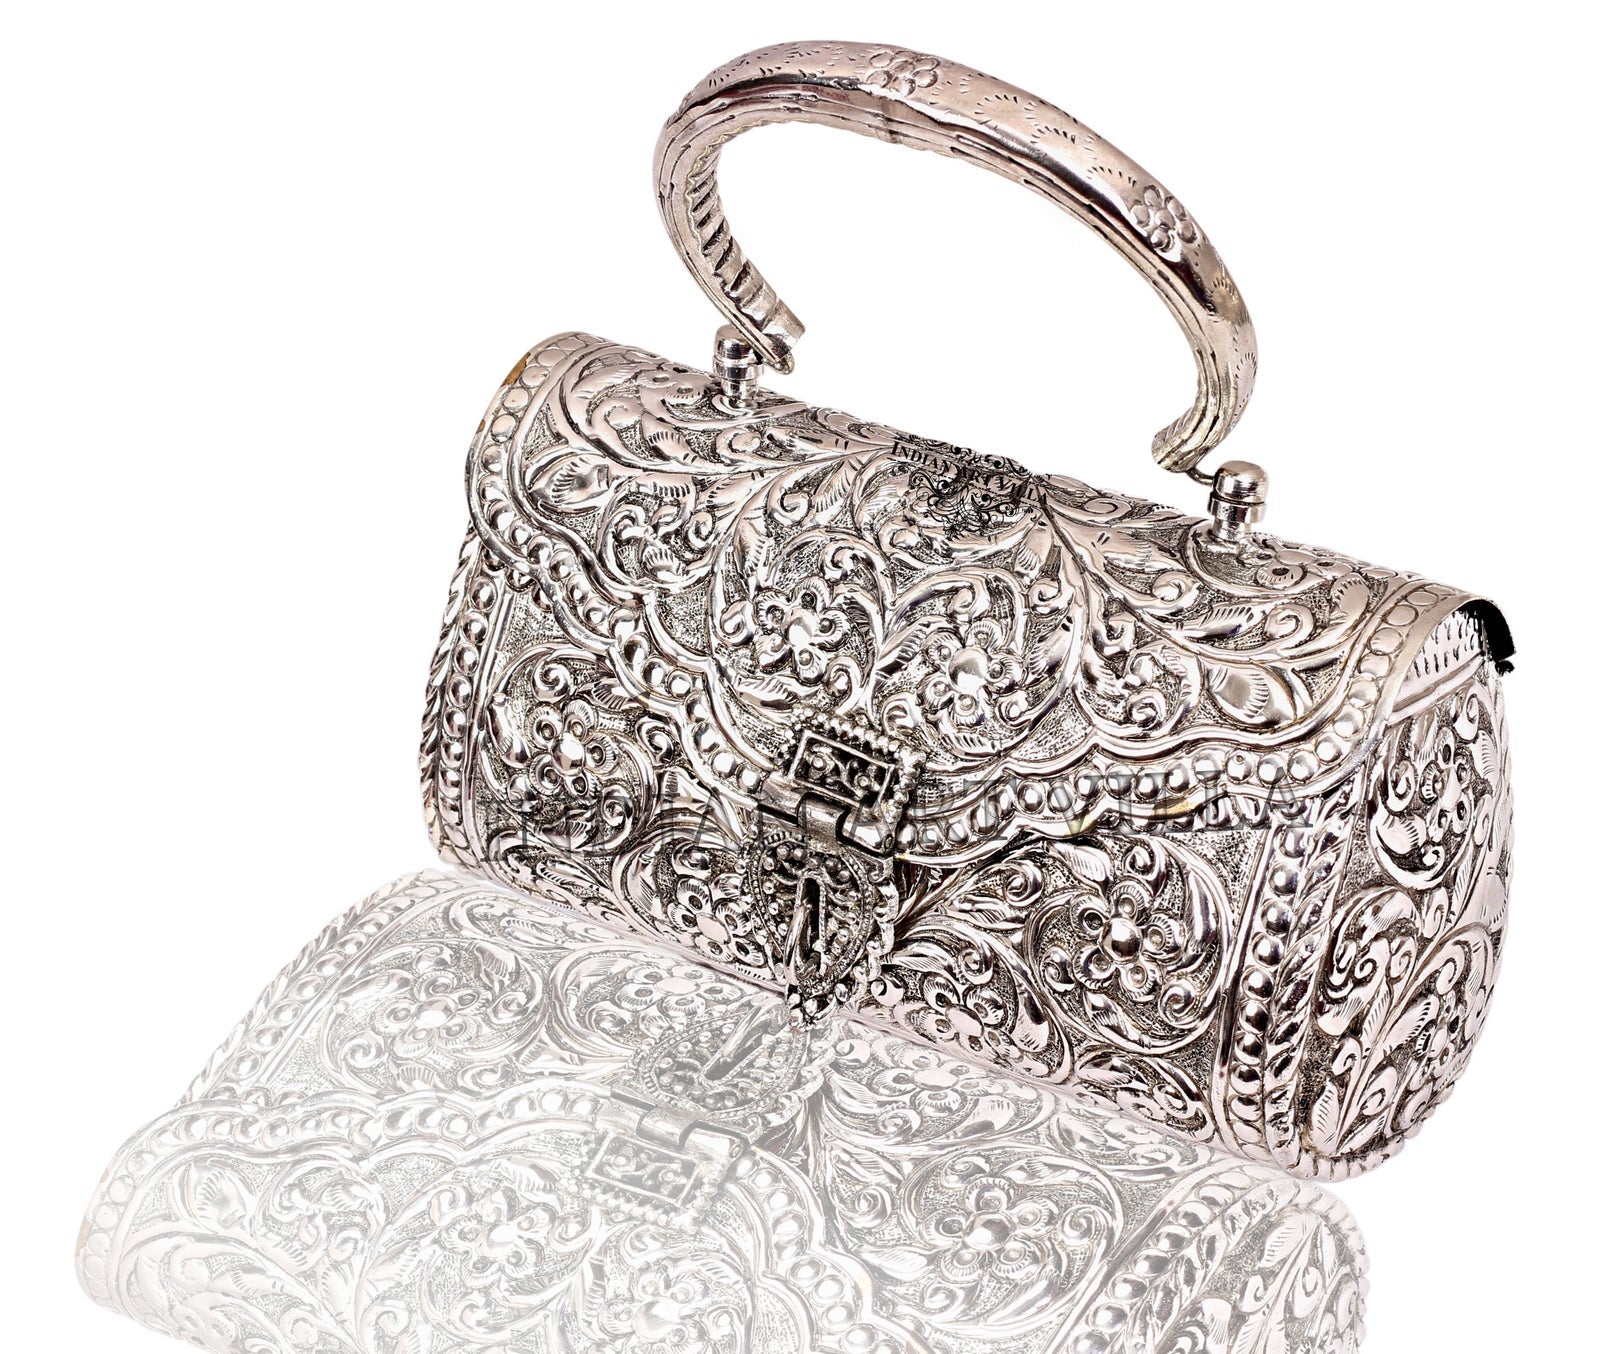 Buy Antique Silver Clutches For Wedding | Krishnapearls.com